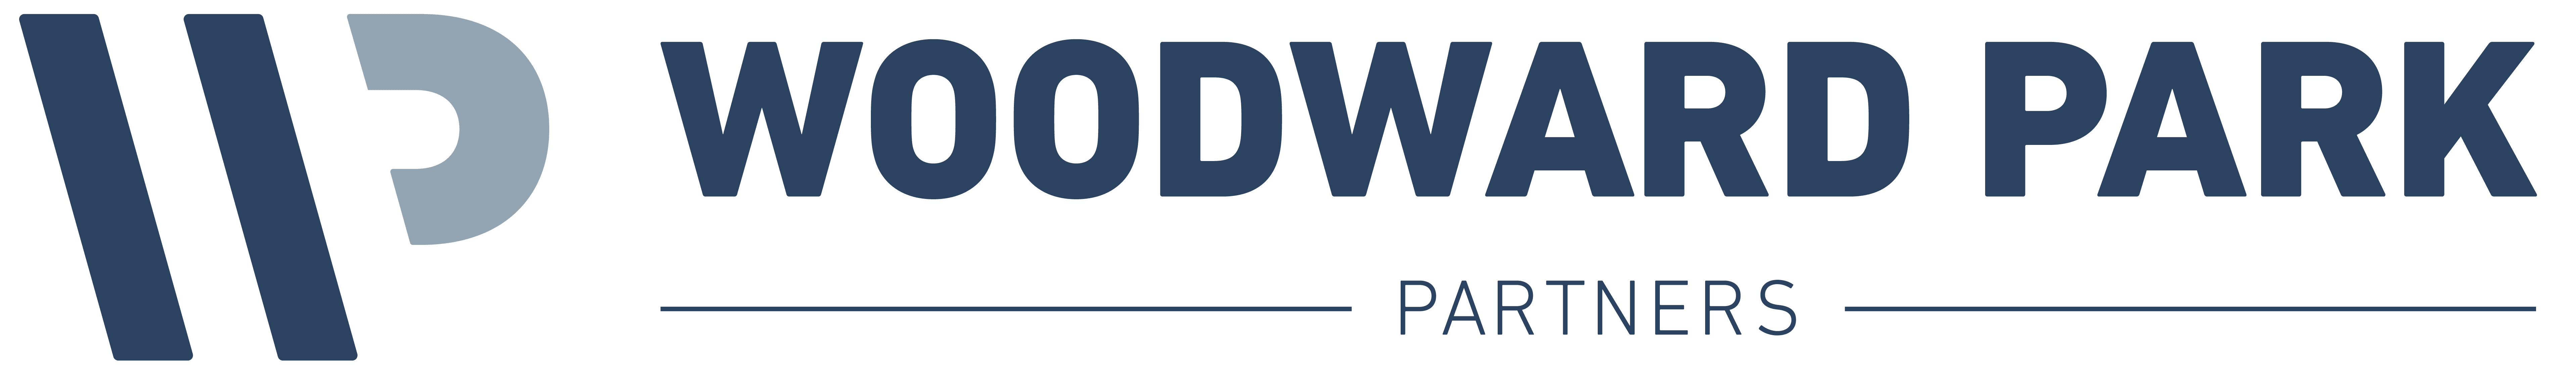 Woodward Park Partners